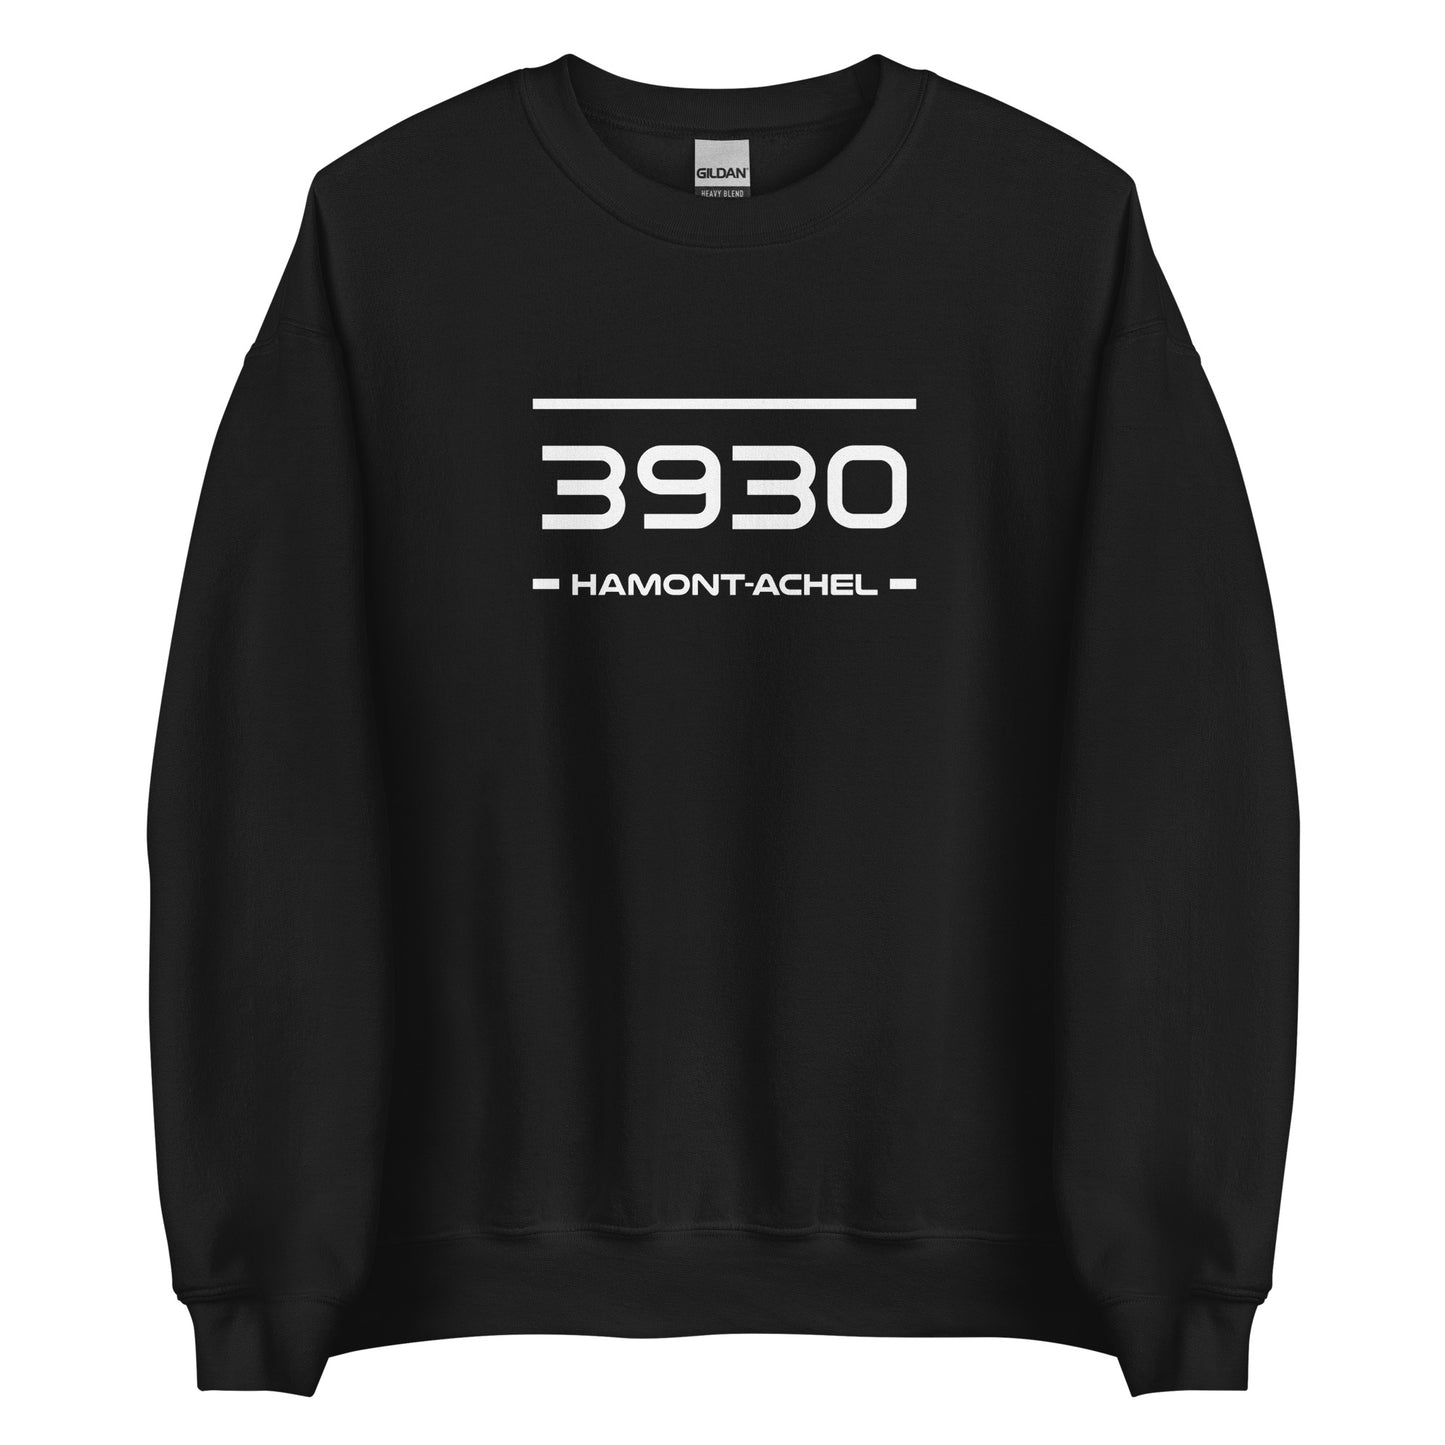 Sweater - 3930 - Hamont-Achel (M/V)